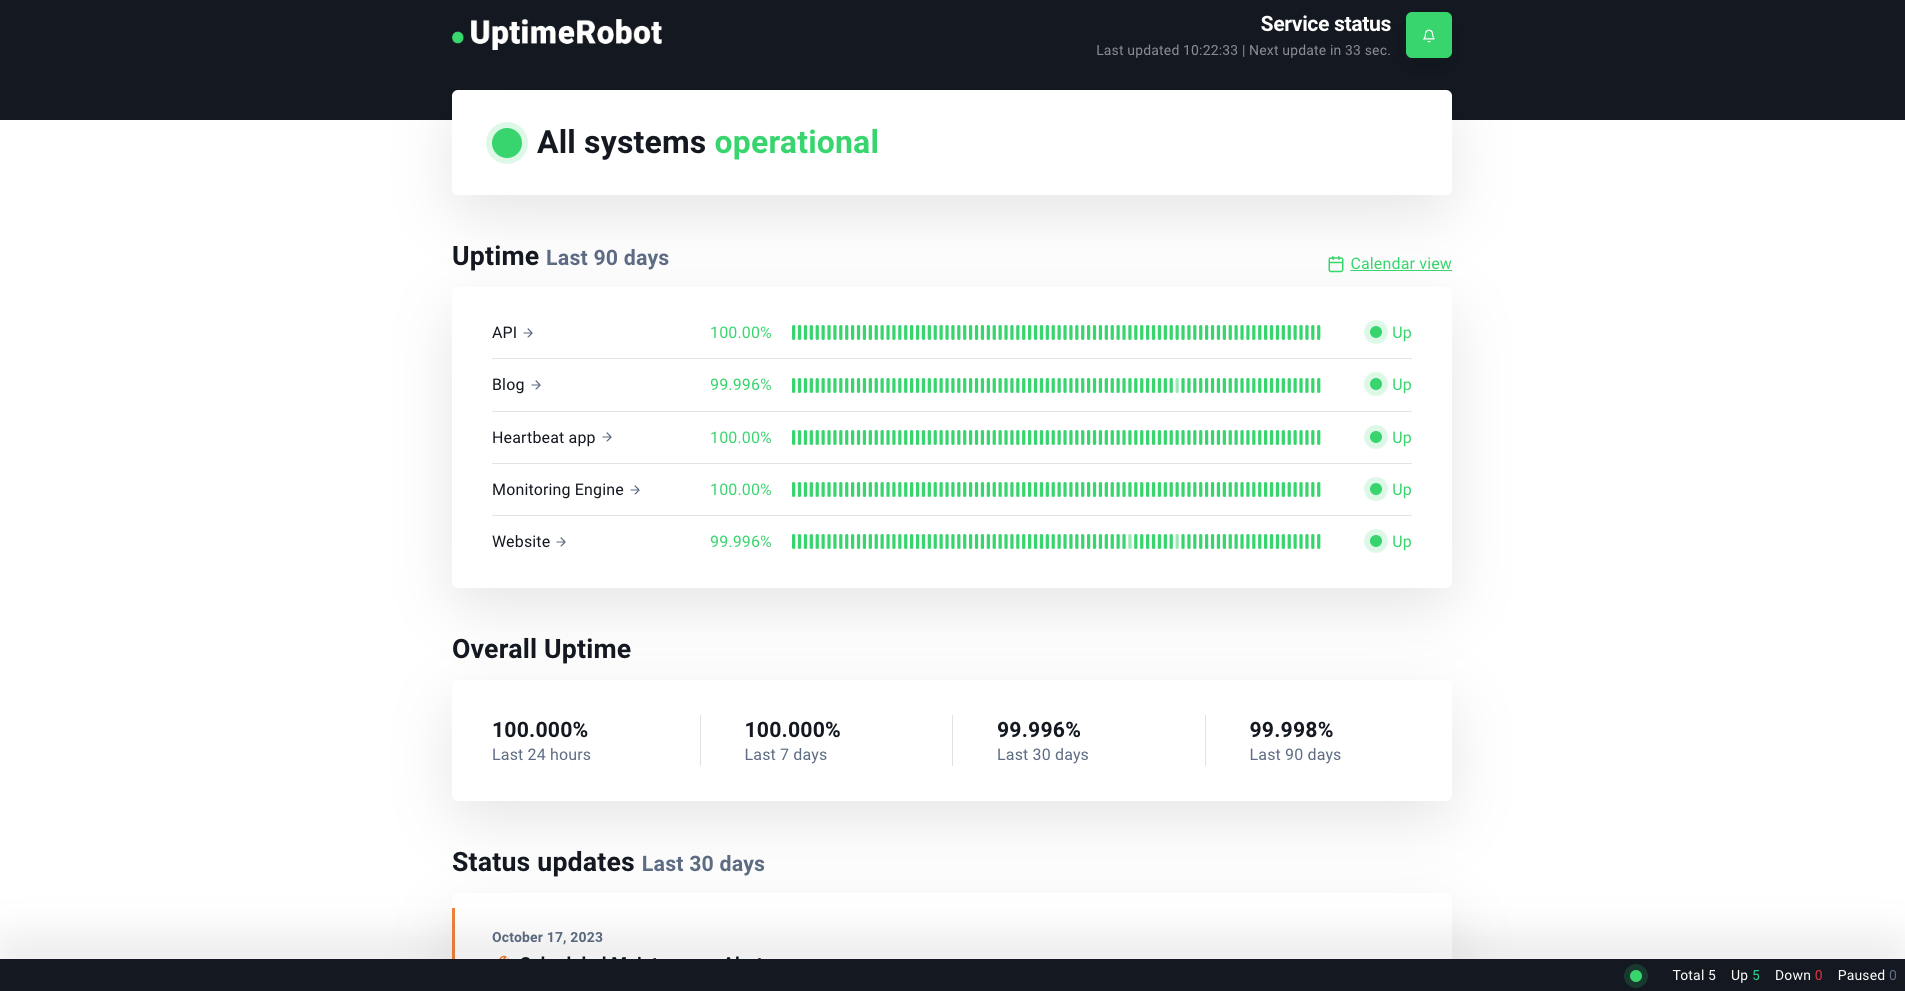 Uptimerobot overall uptime